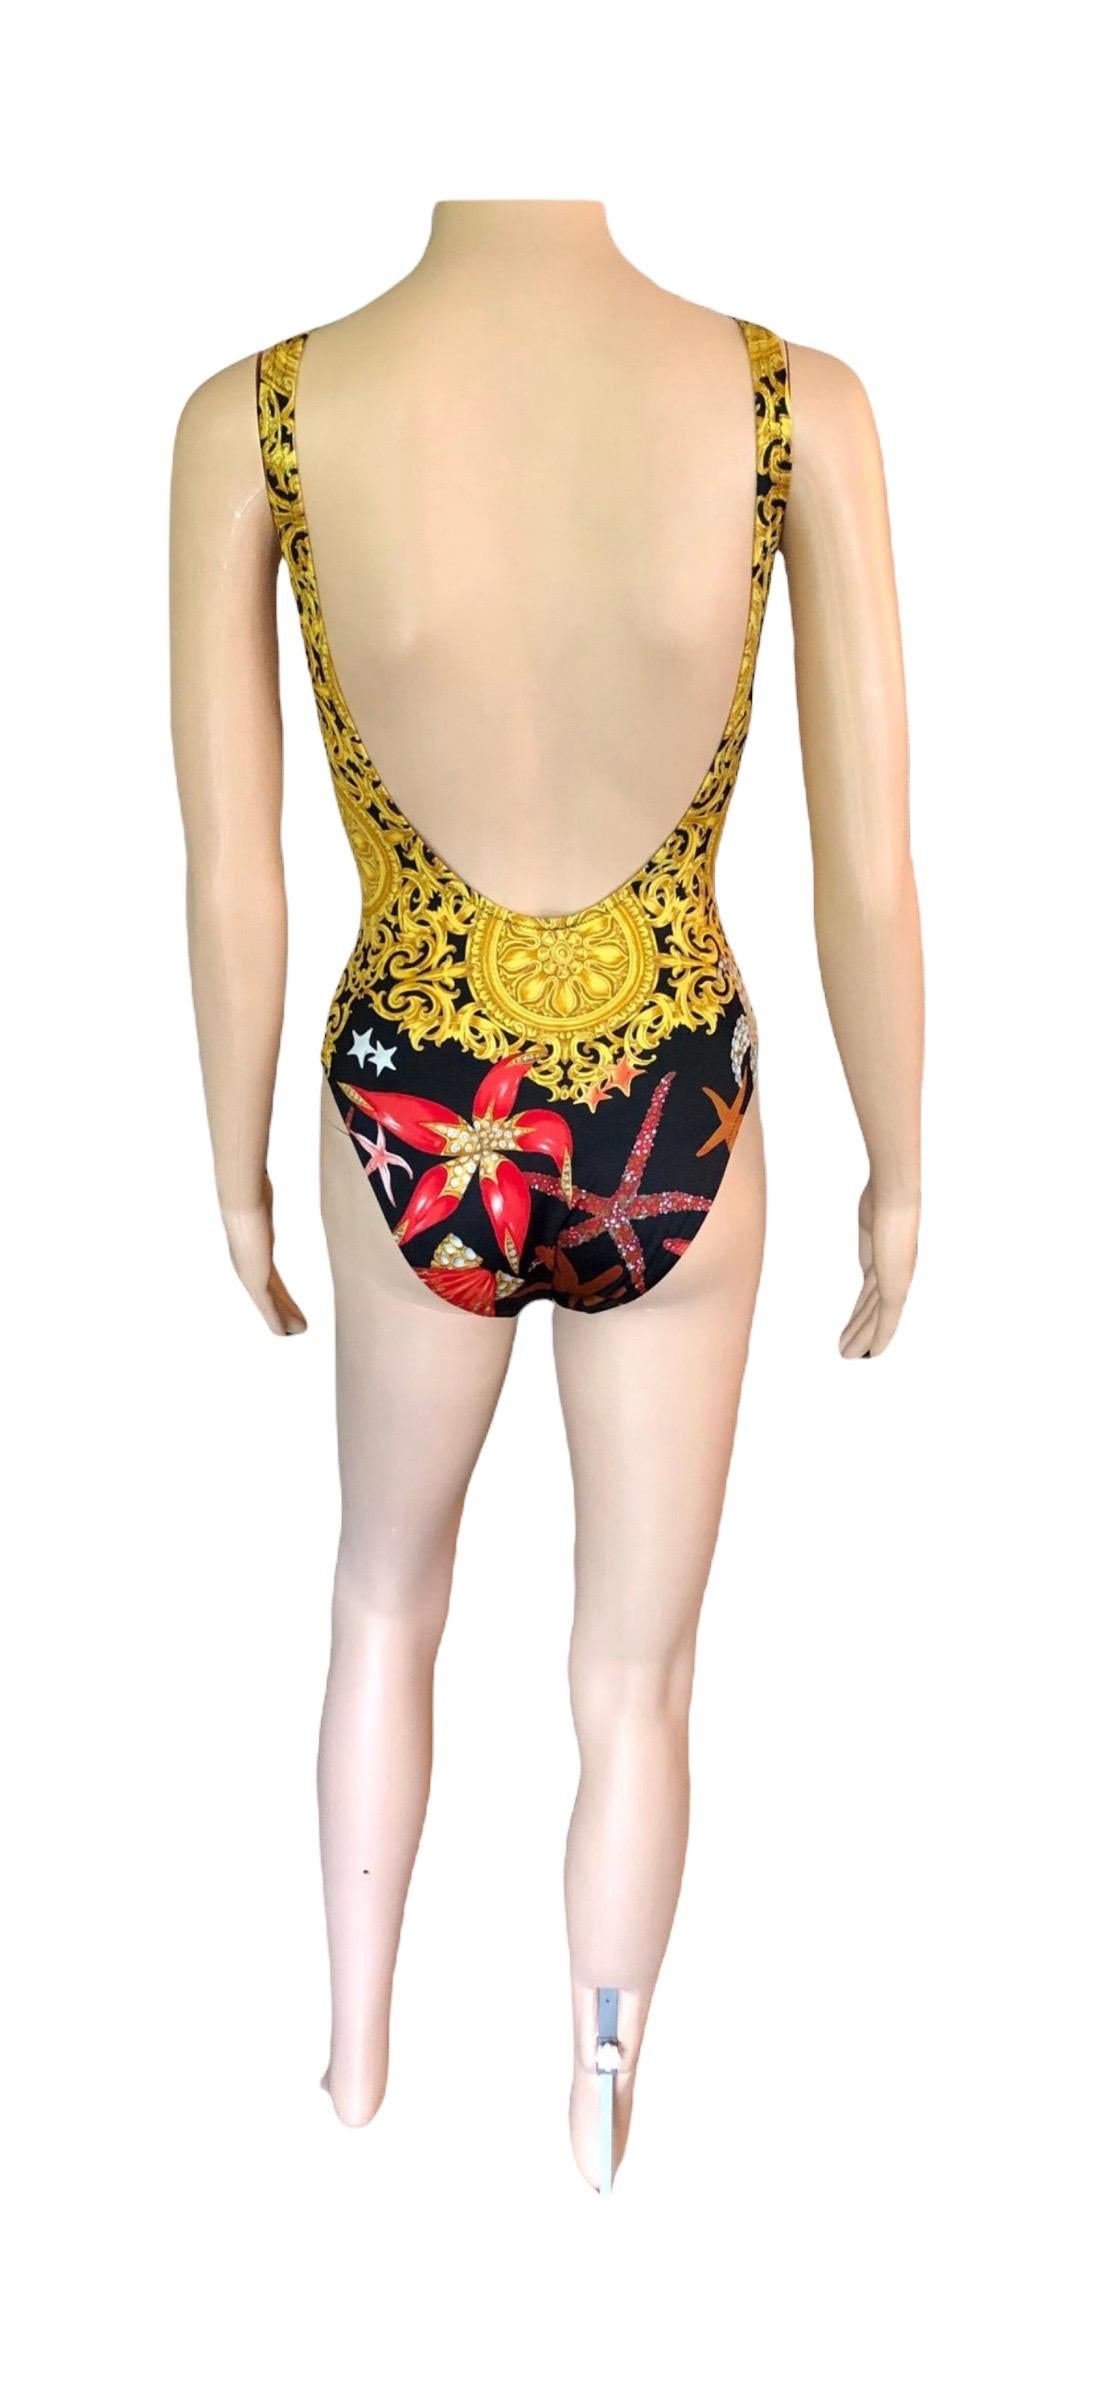 Gianni Versace S/S 1992 Baroque Seashell Backless Bodysuit Swimwear Swimsuit For Sale 4